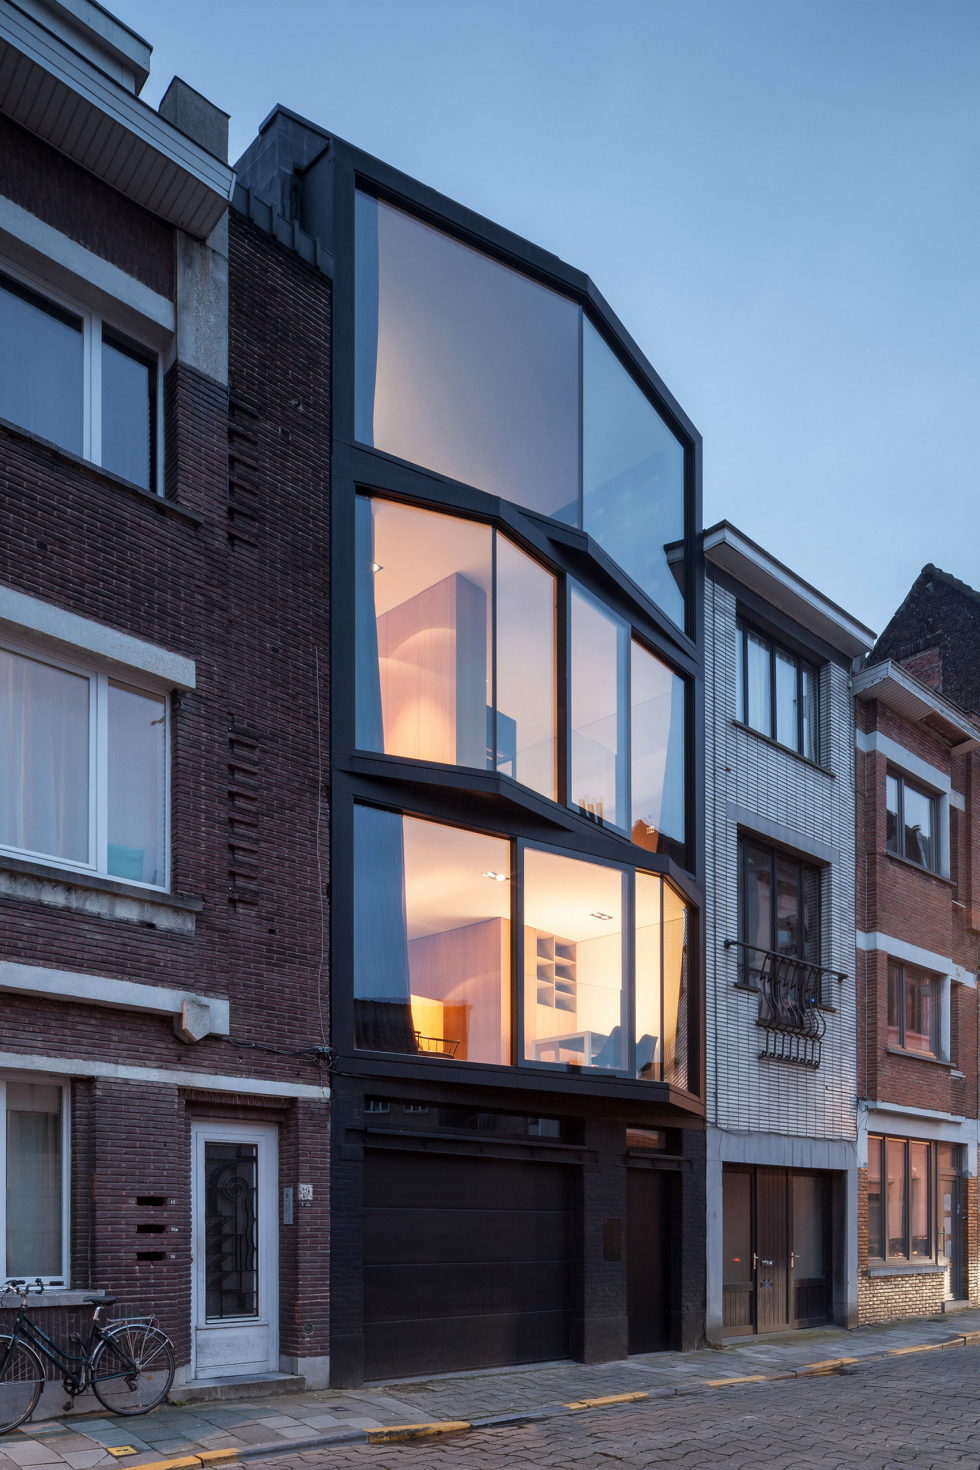 The House With Polyangular Glass Facade In Belgium 27